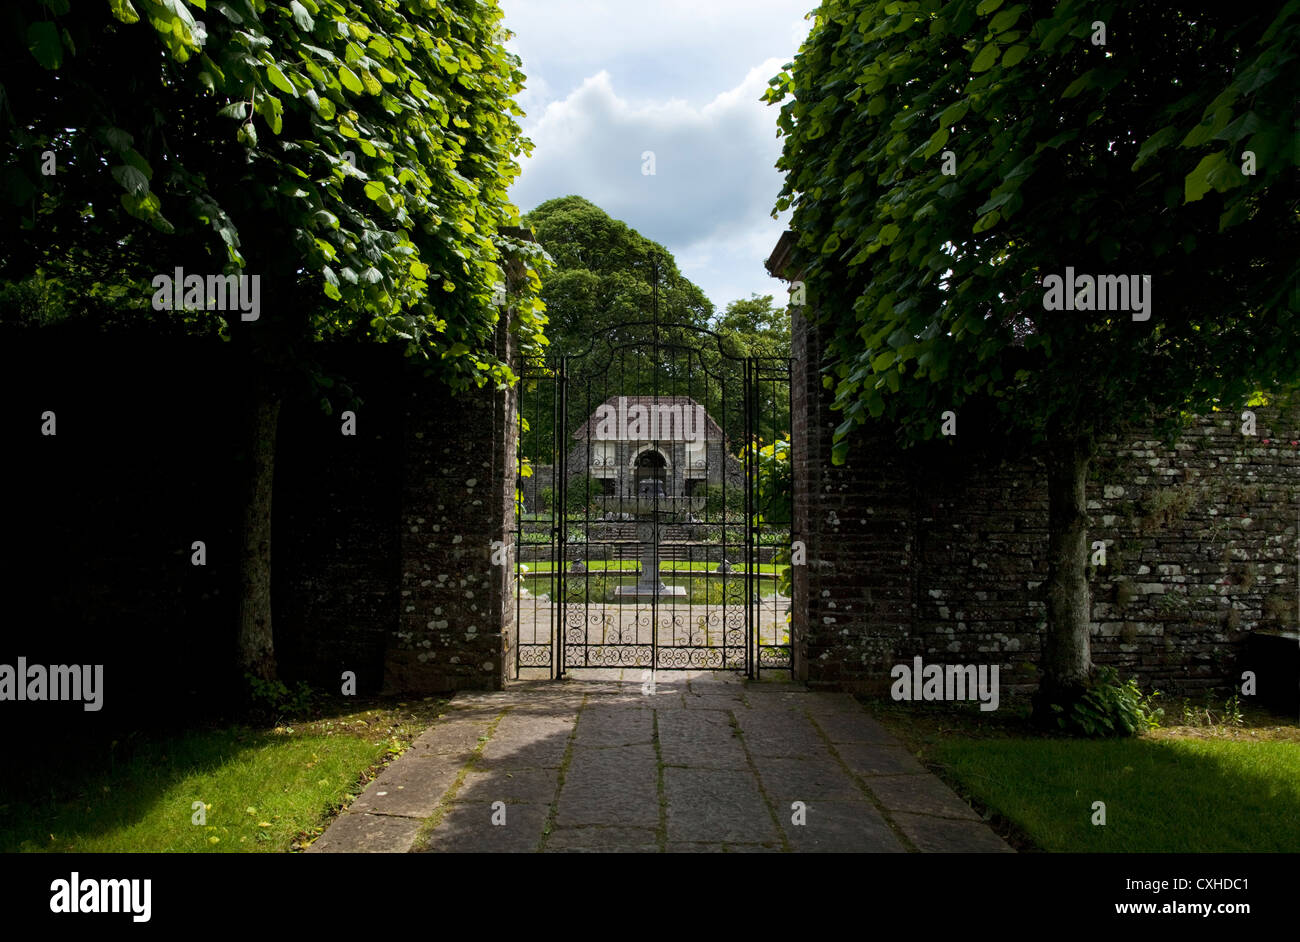 Pollarded lime Walk and Wrought Iron Gates, Heywood Gardens completed in 1912, Ballinakill, Near Abbeyleix, County Laois, Ireland Stock Photo